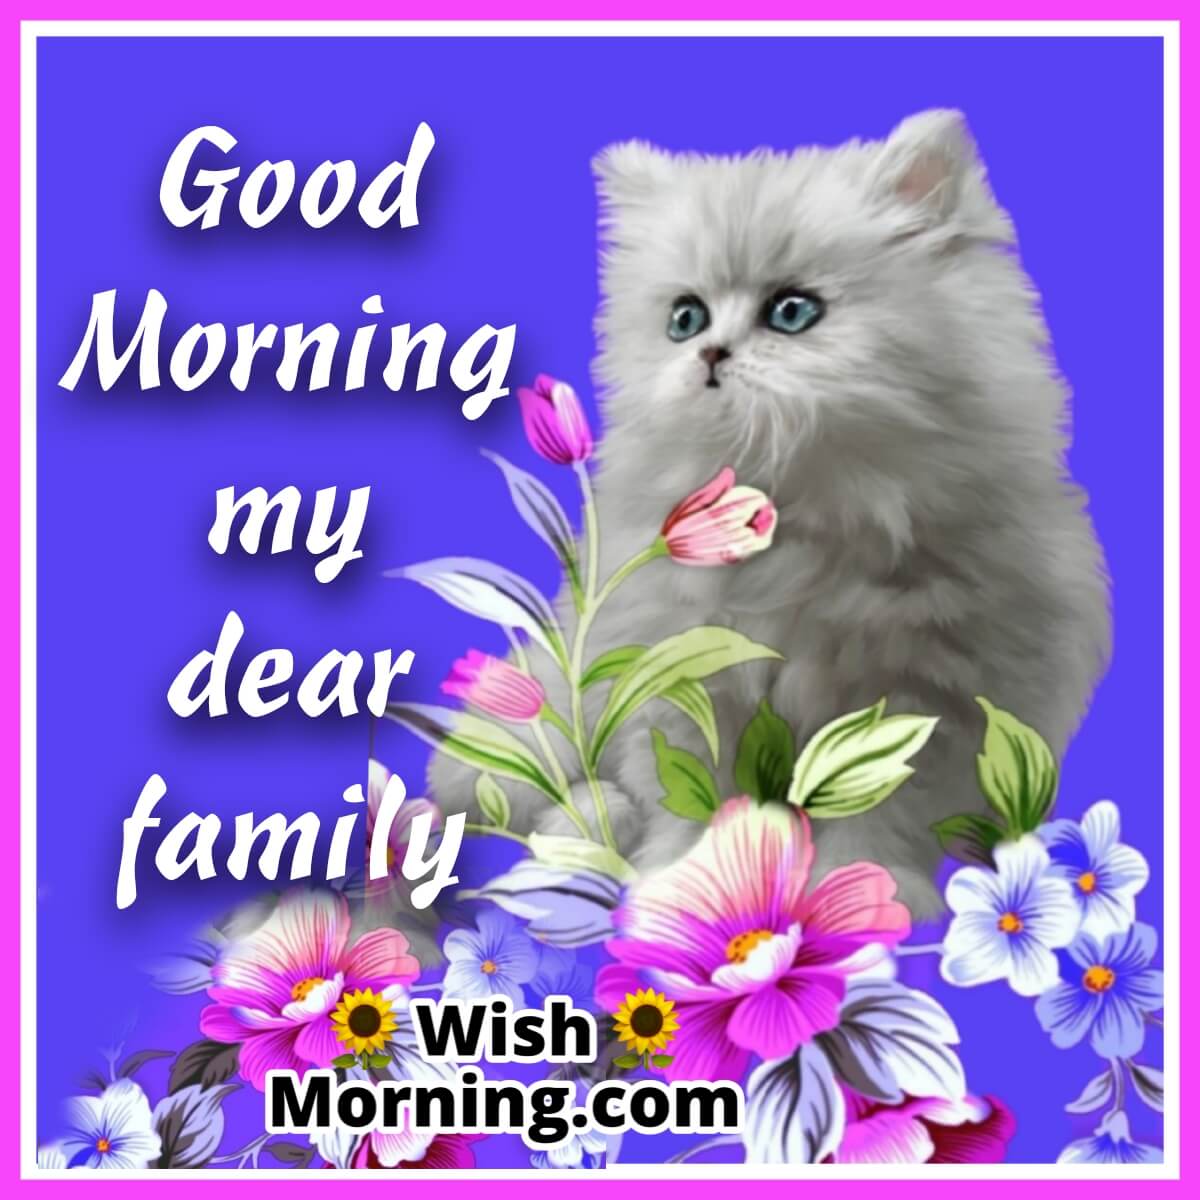 Good Morning Kitten Card